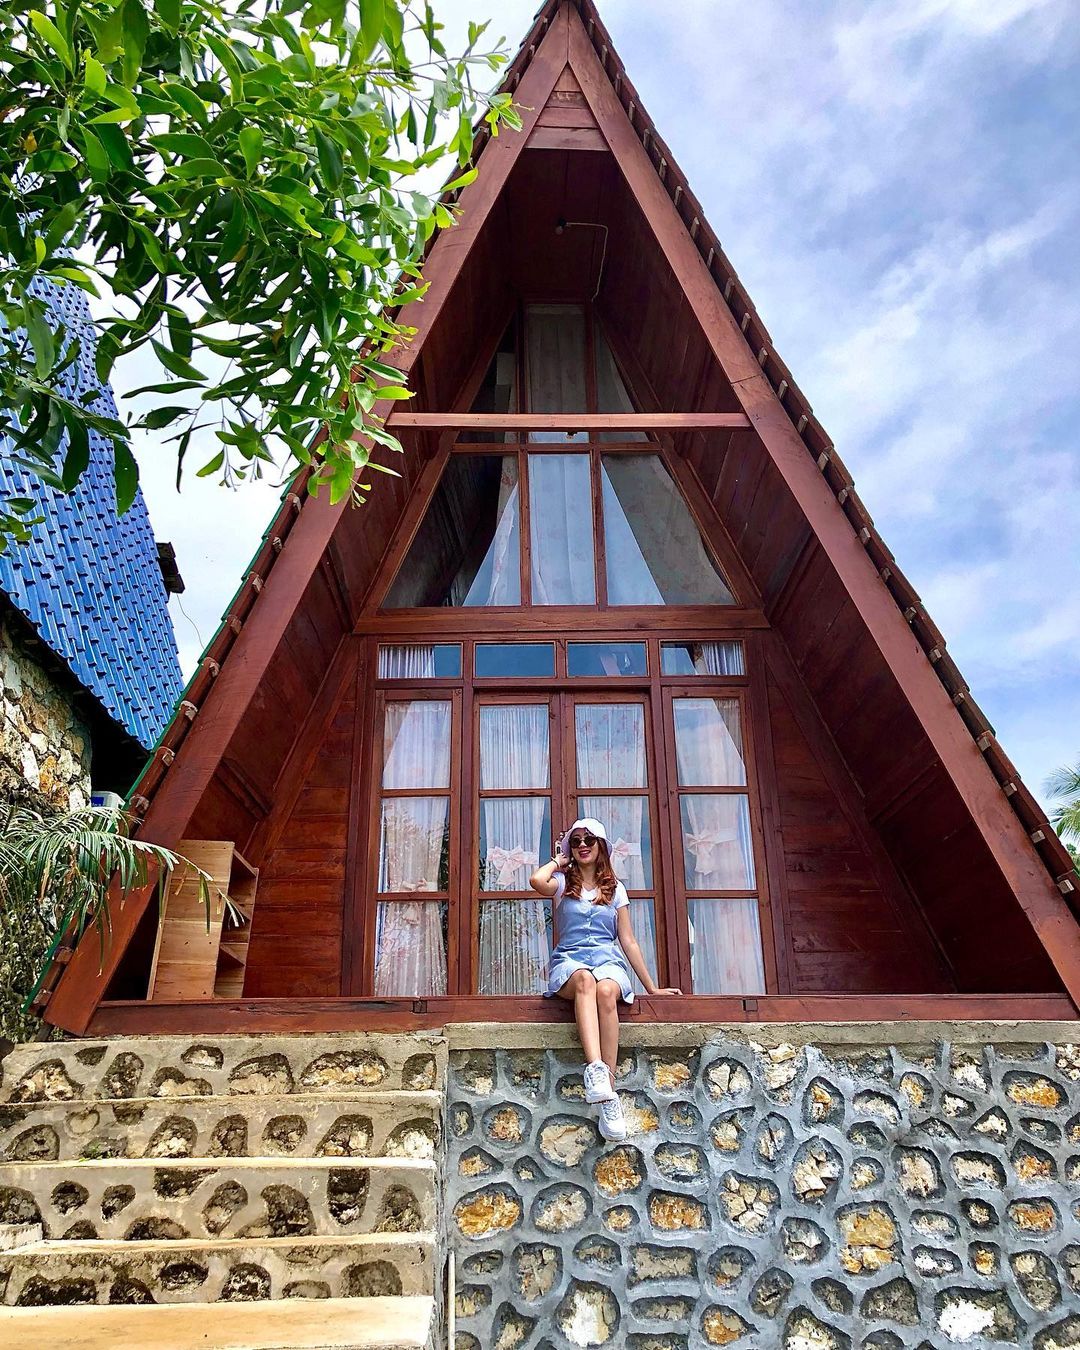 Villa Di Puncak Segoro Gunung Kidul Image From @chintya_choe